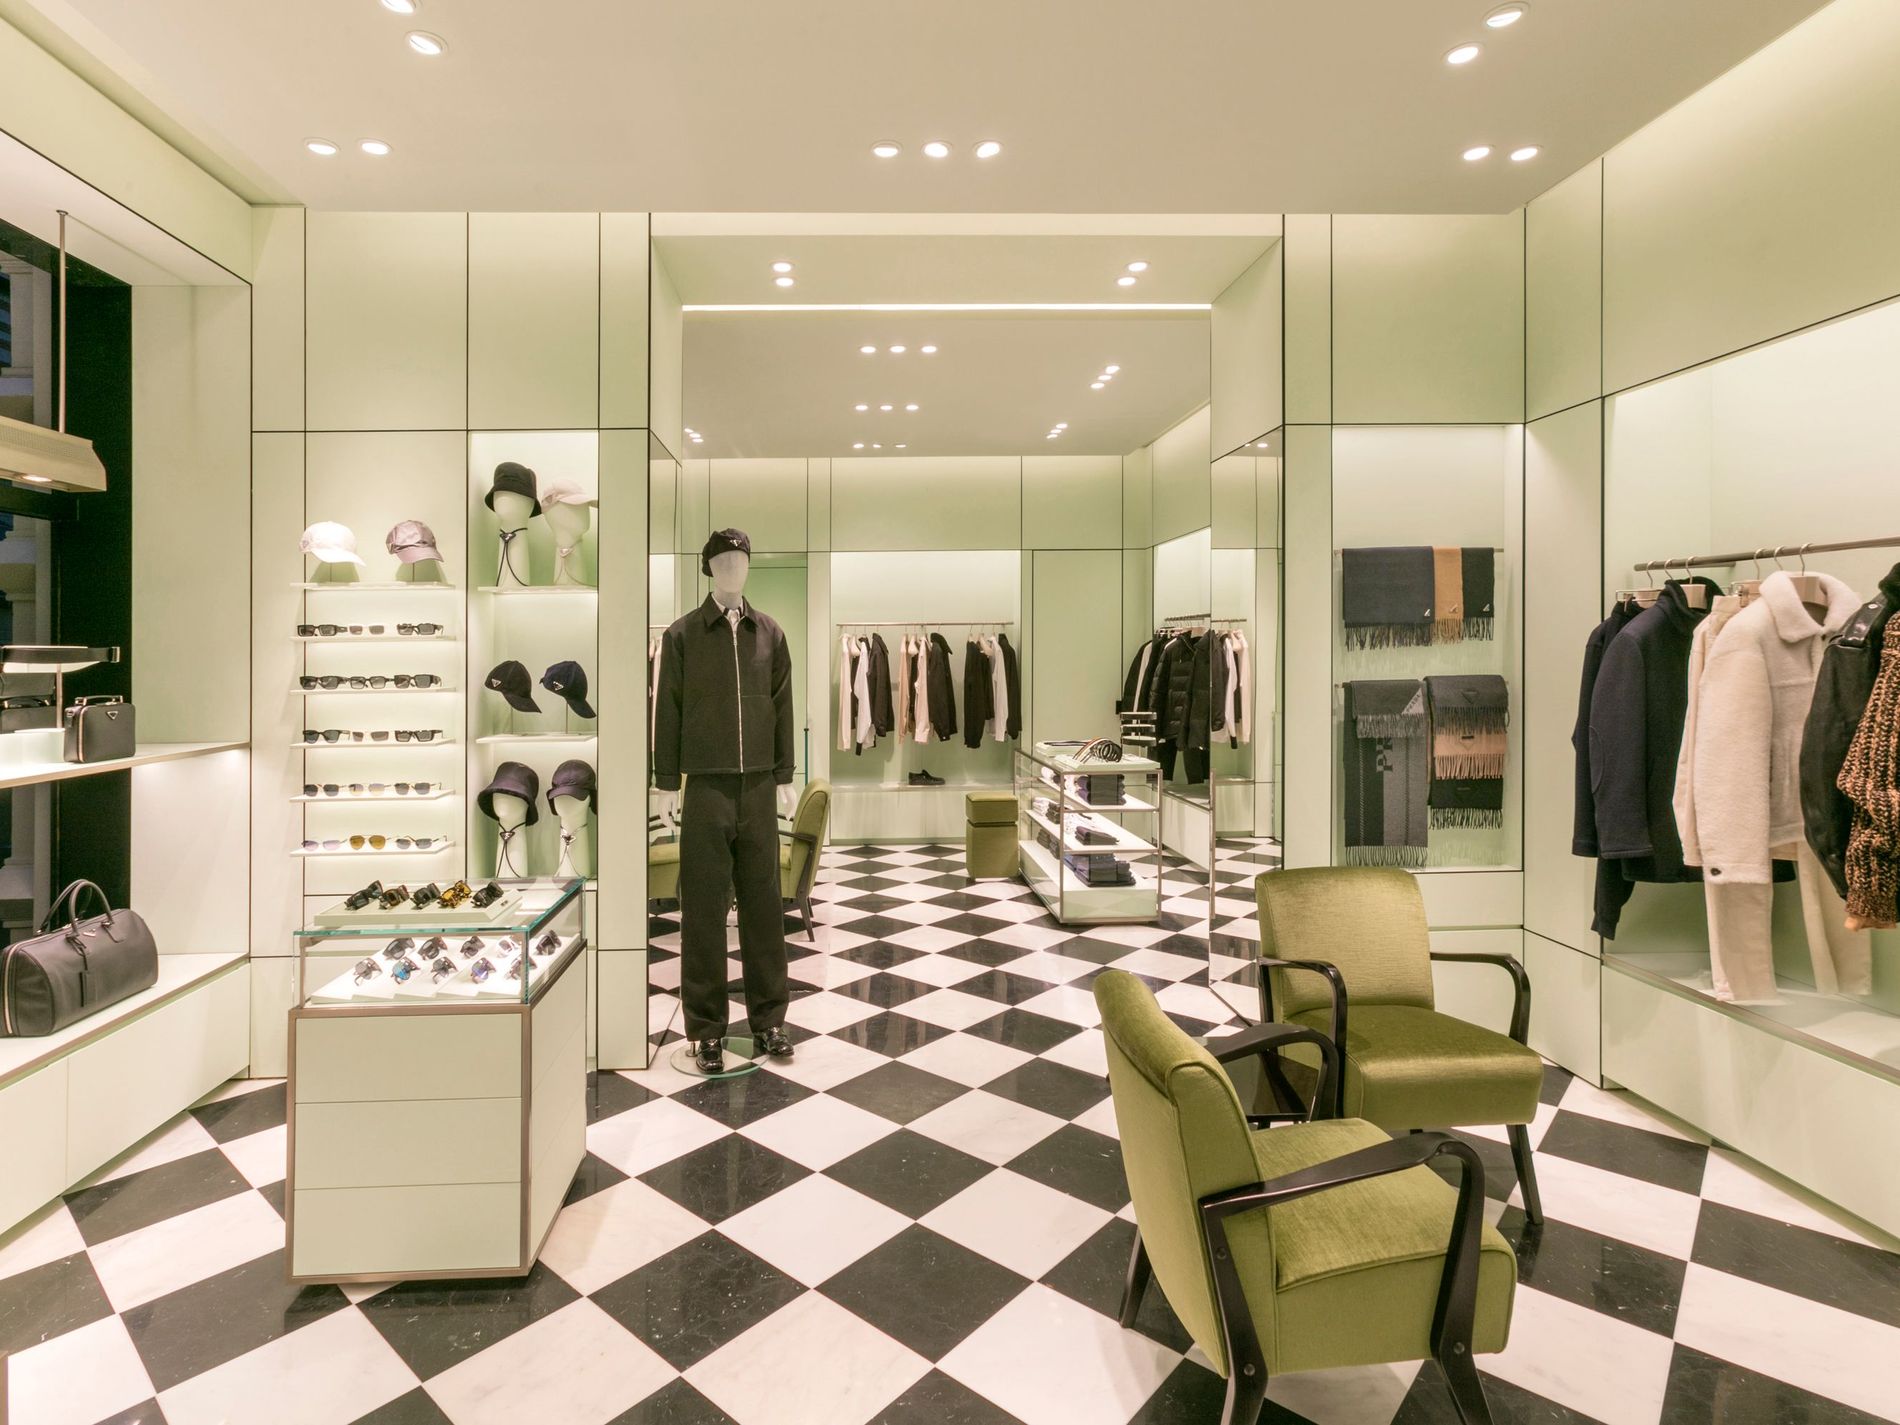 The interiors of Prada's new Stockholm menswear store